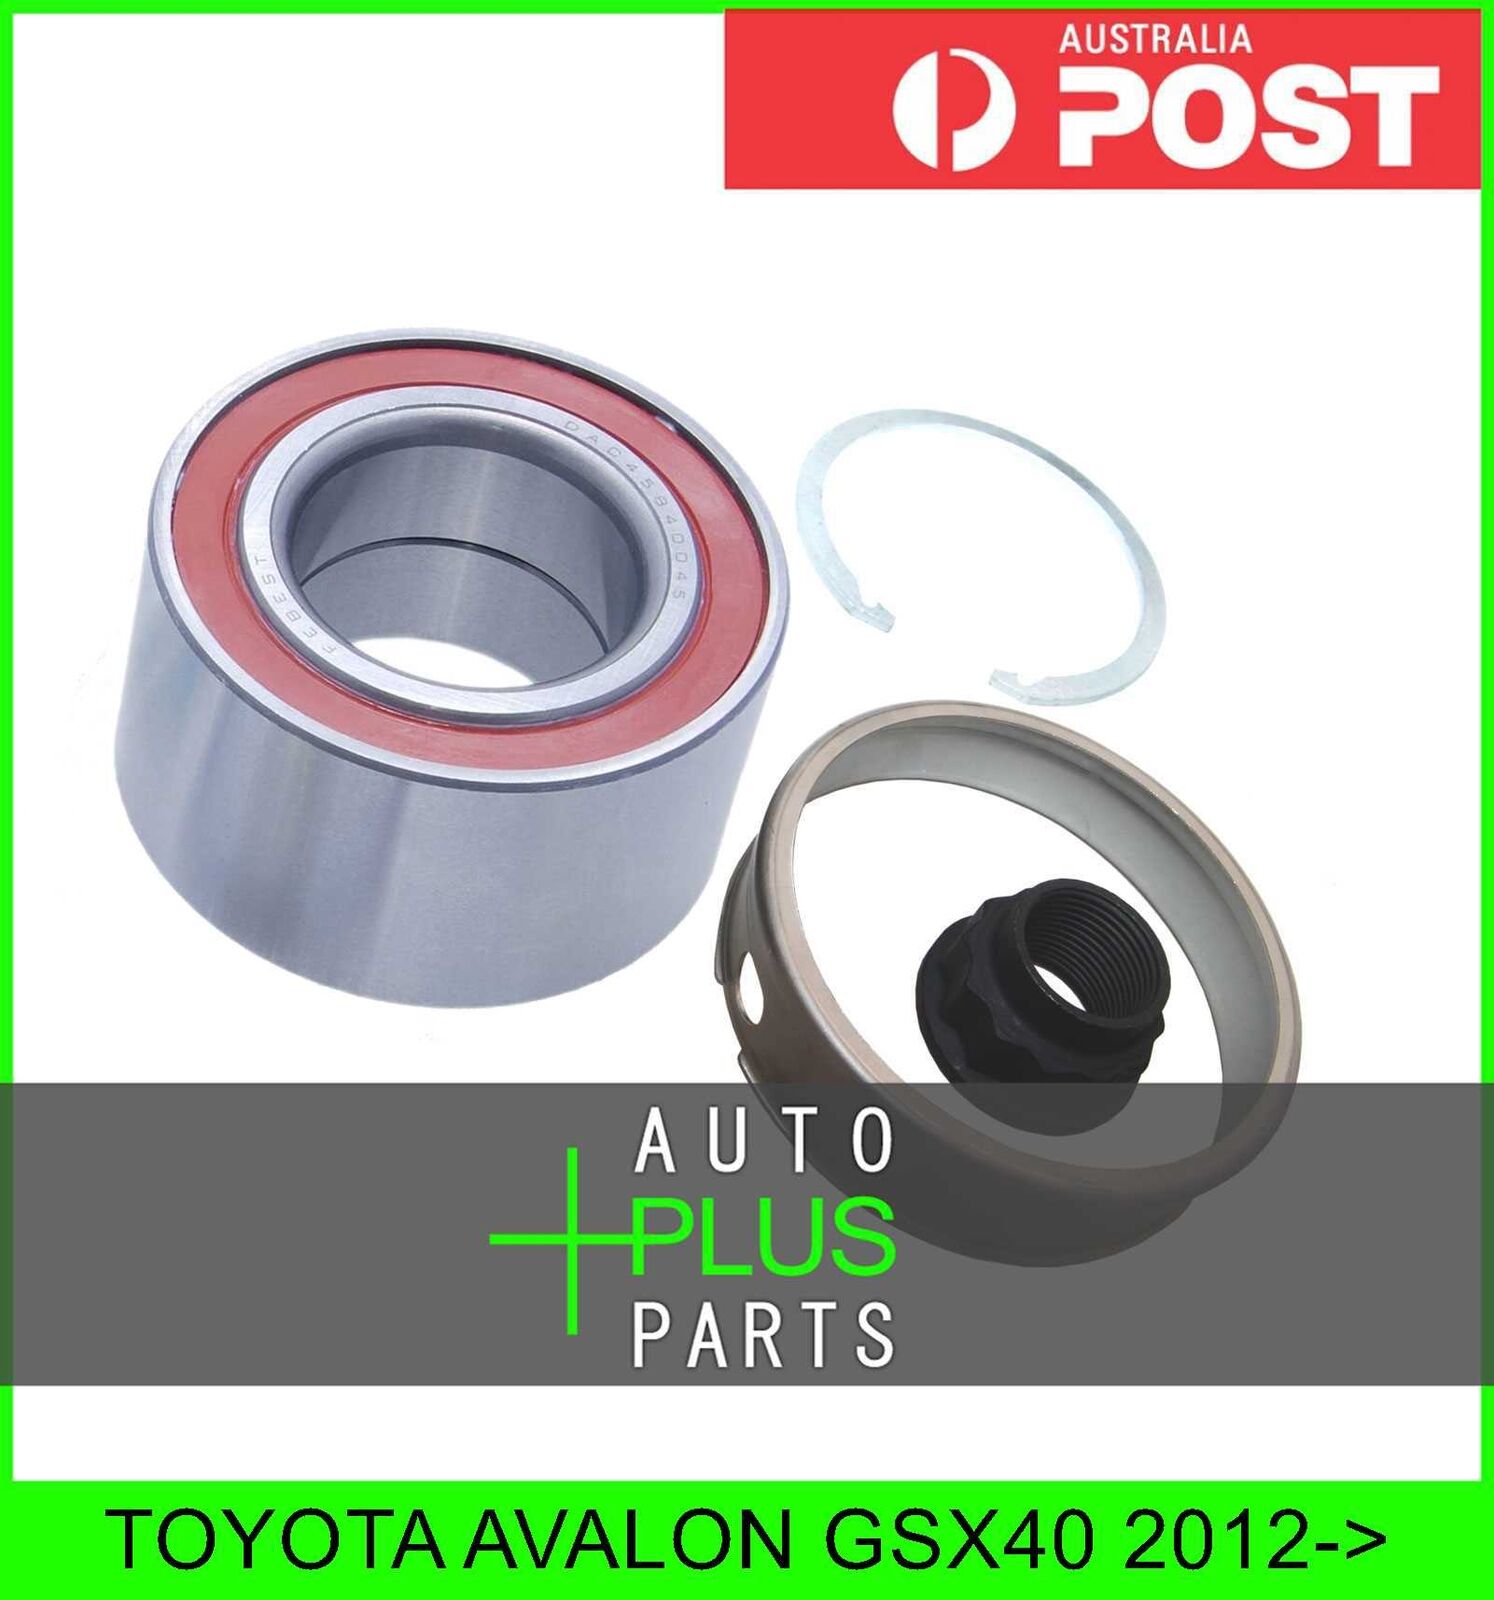 Fits TOYOTA AVALON GSX40 Front Wheel Bearing Repair Kit(Bearing 2 Oil Seal Ring)